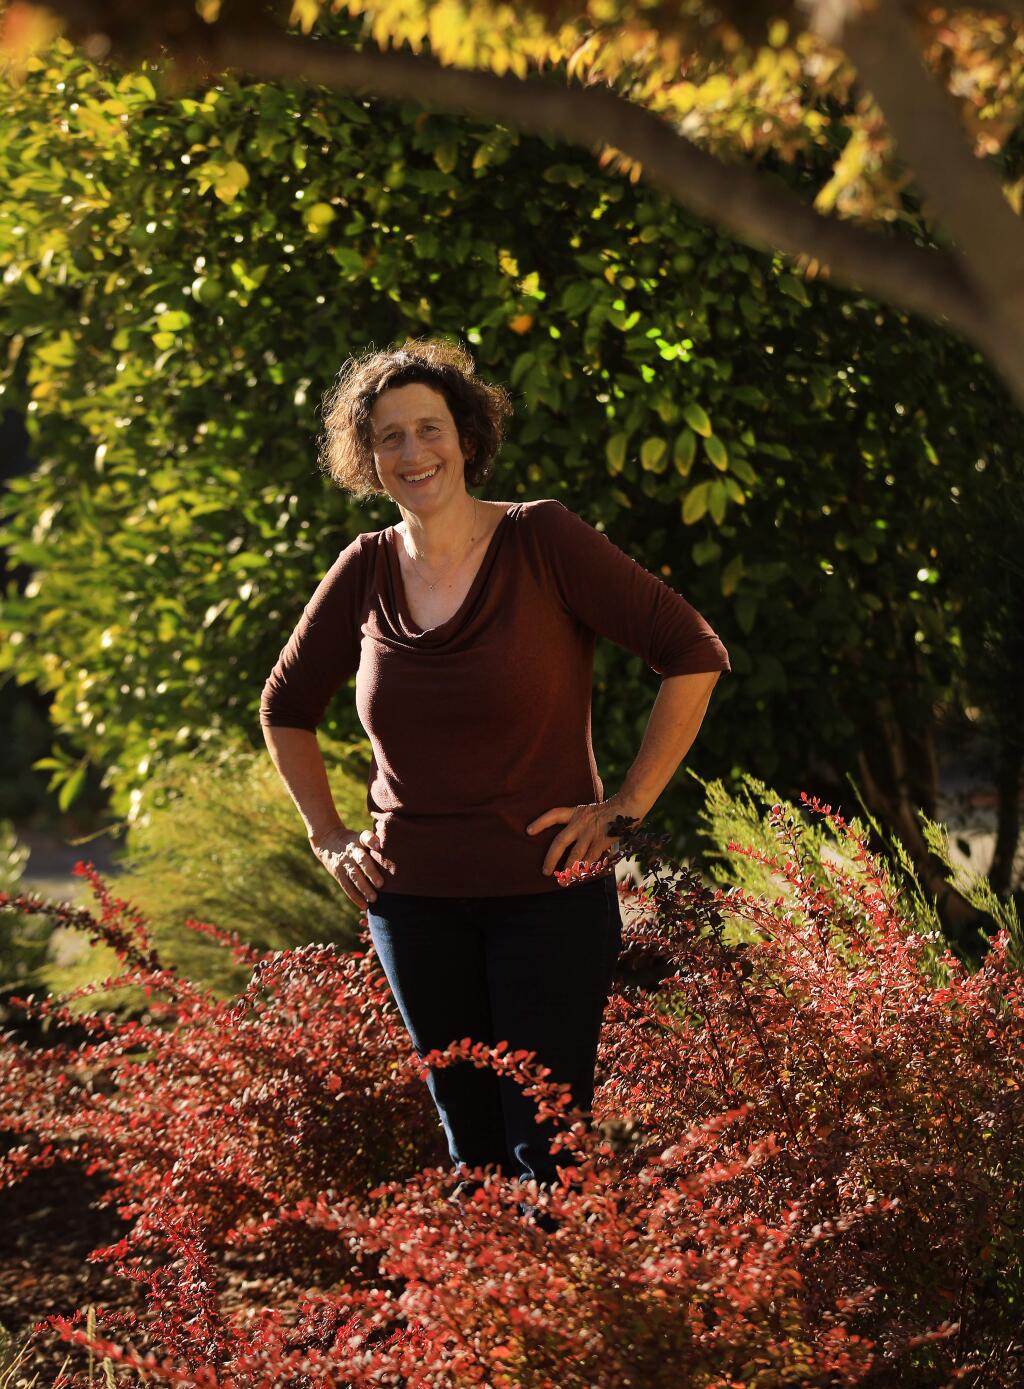 Berkeley-based Nina Mullen of Mullen Designs recently was named Designer of the Year by the National Association of Professional Landscape Designers. (Kent Porter / The Press Democrat)